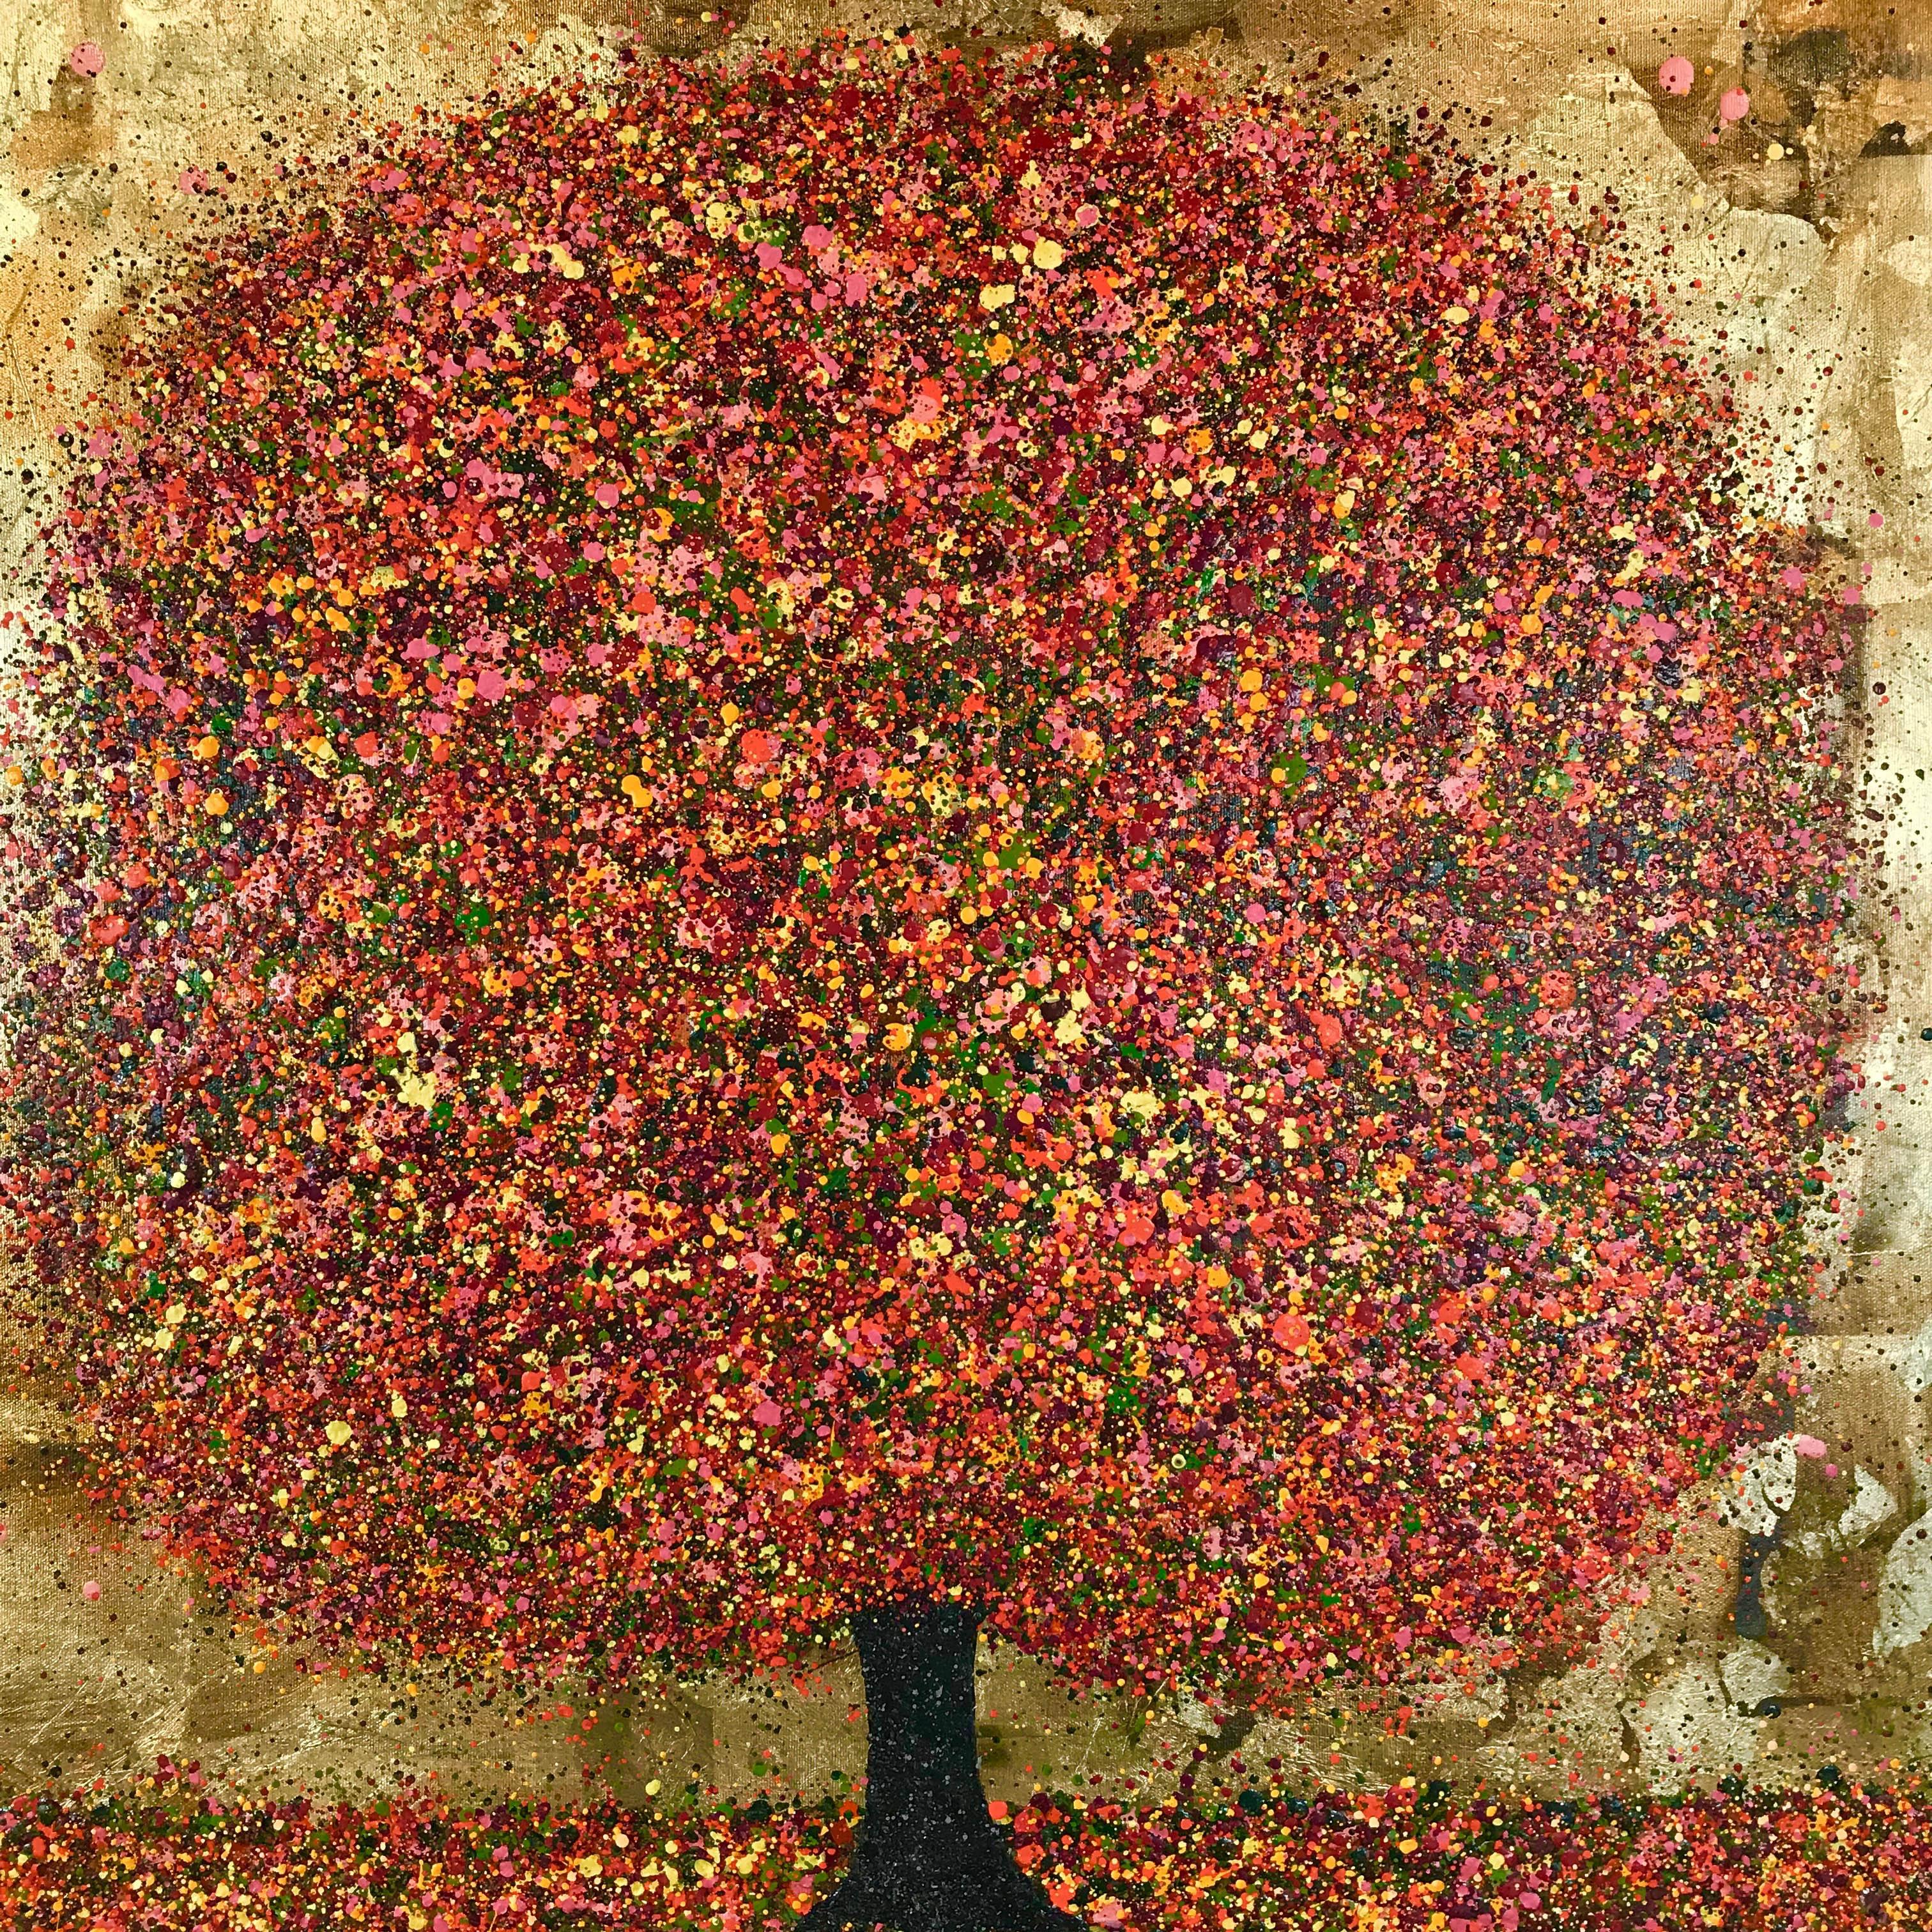 Magical Autumn Light  - Mixed Media Art by Nicky Chubb